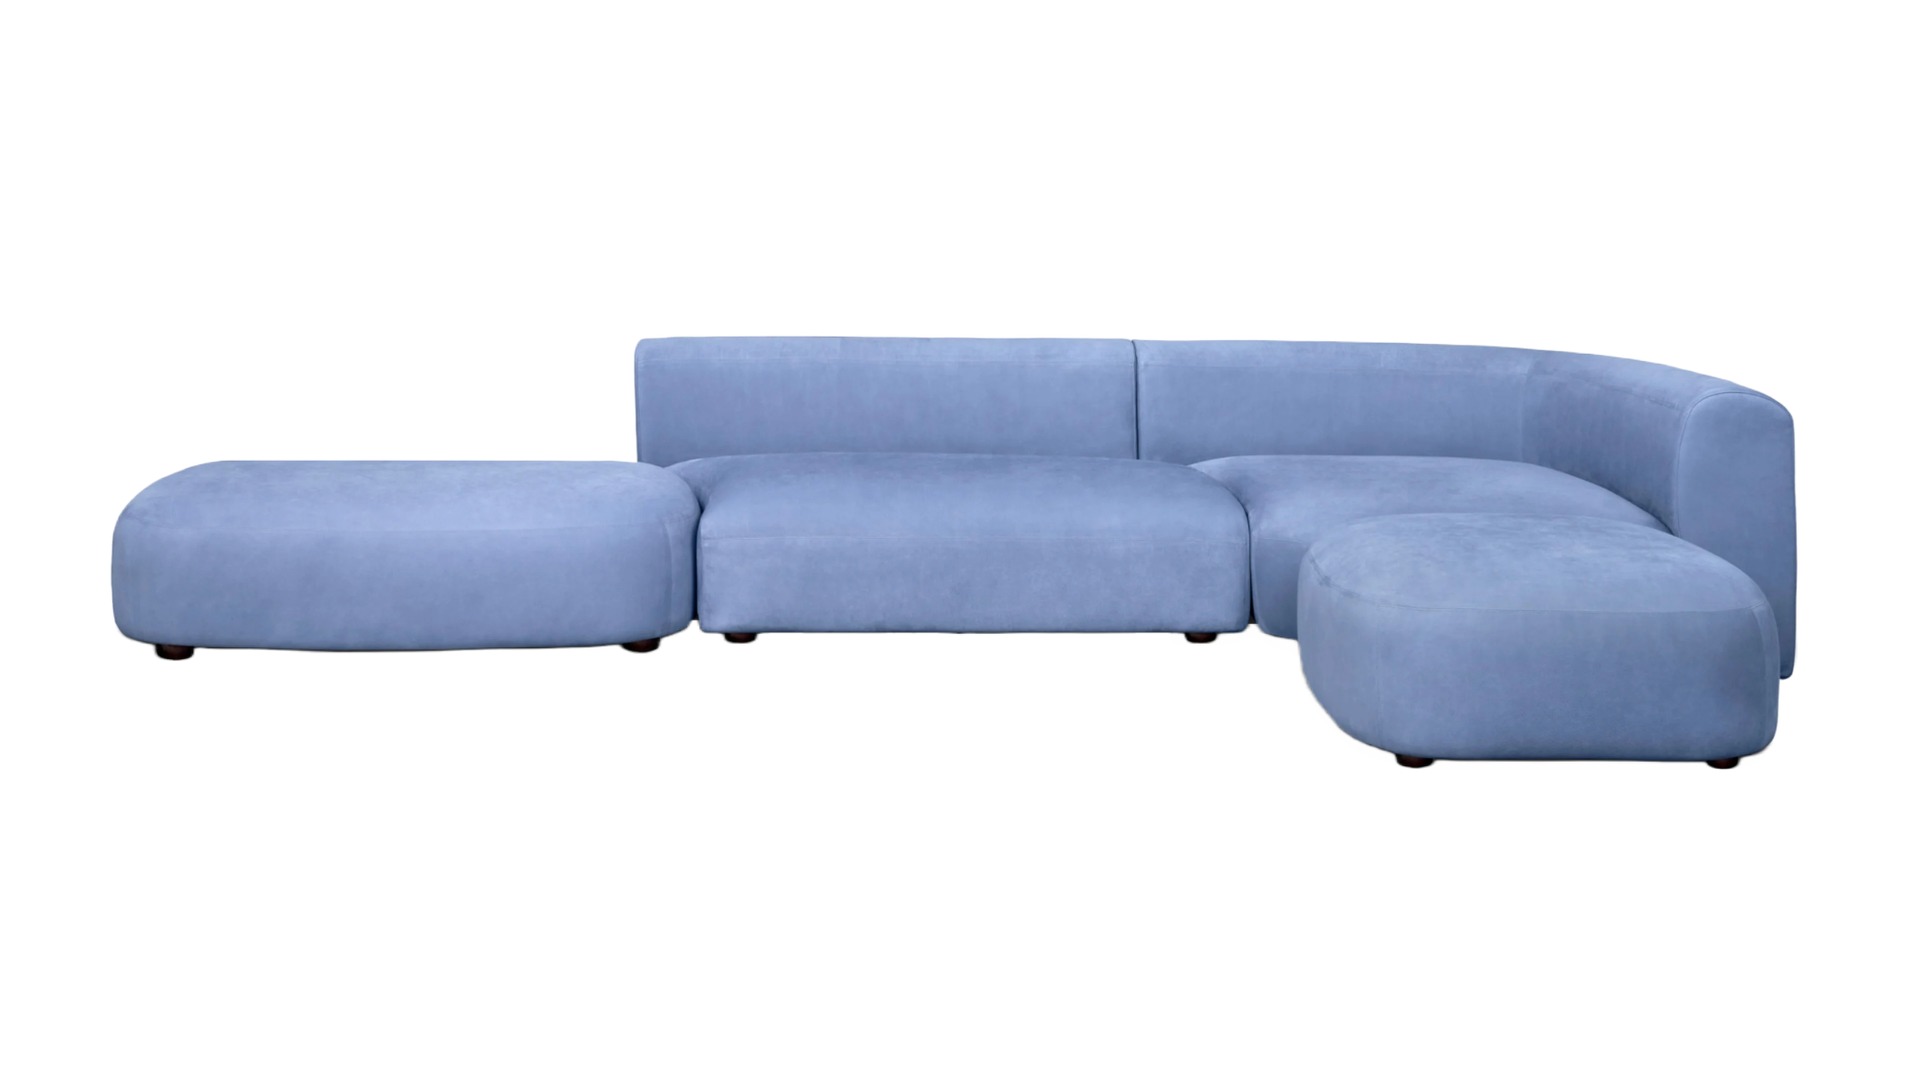 Baxter Clara modulaire bank sofa bench Hora Barneveld 12.jpg